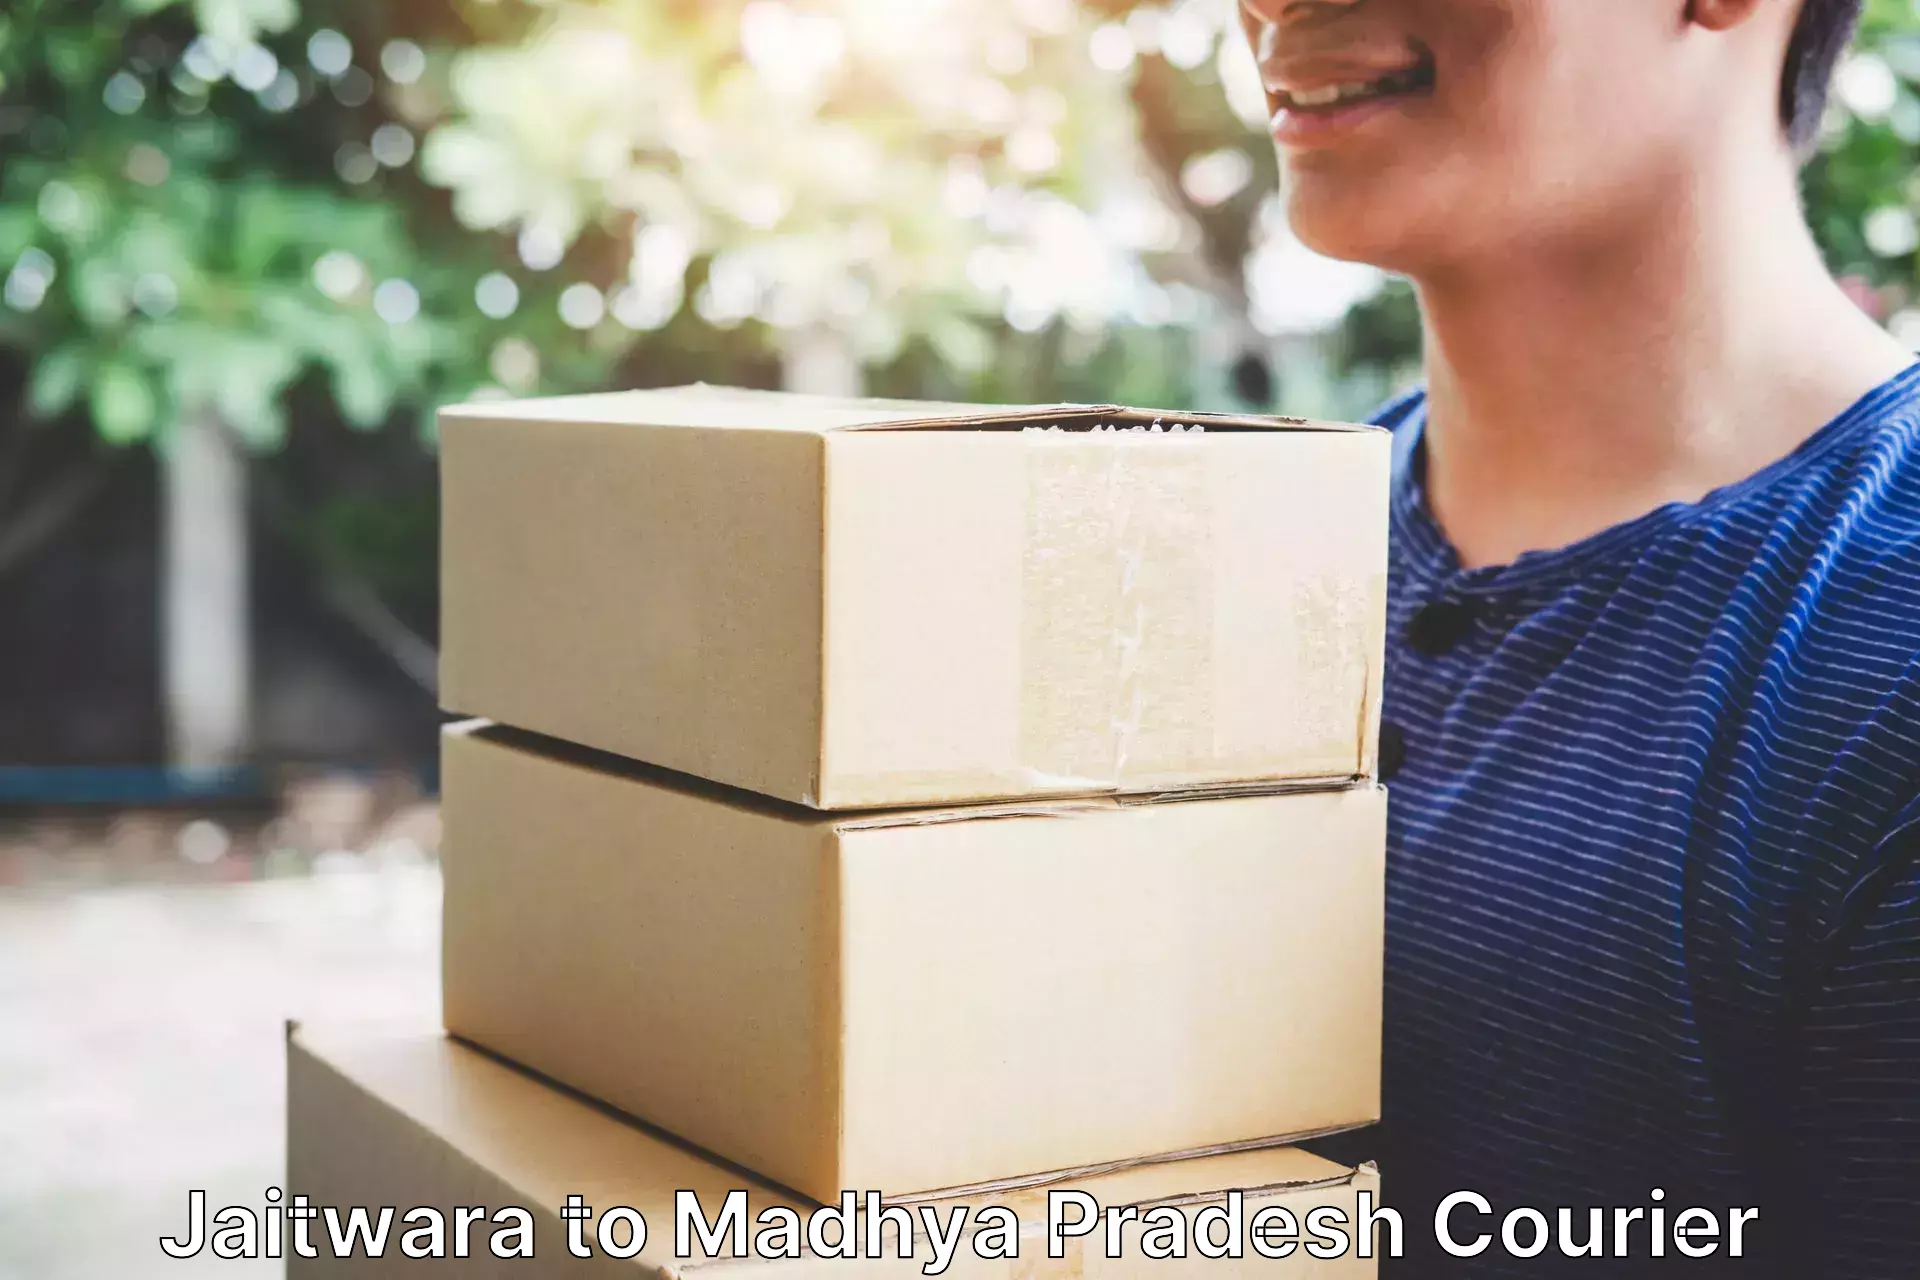 24-hour courier services Jaitwara to Madhya Pradesh